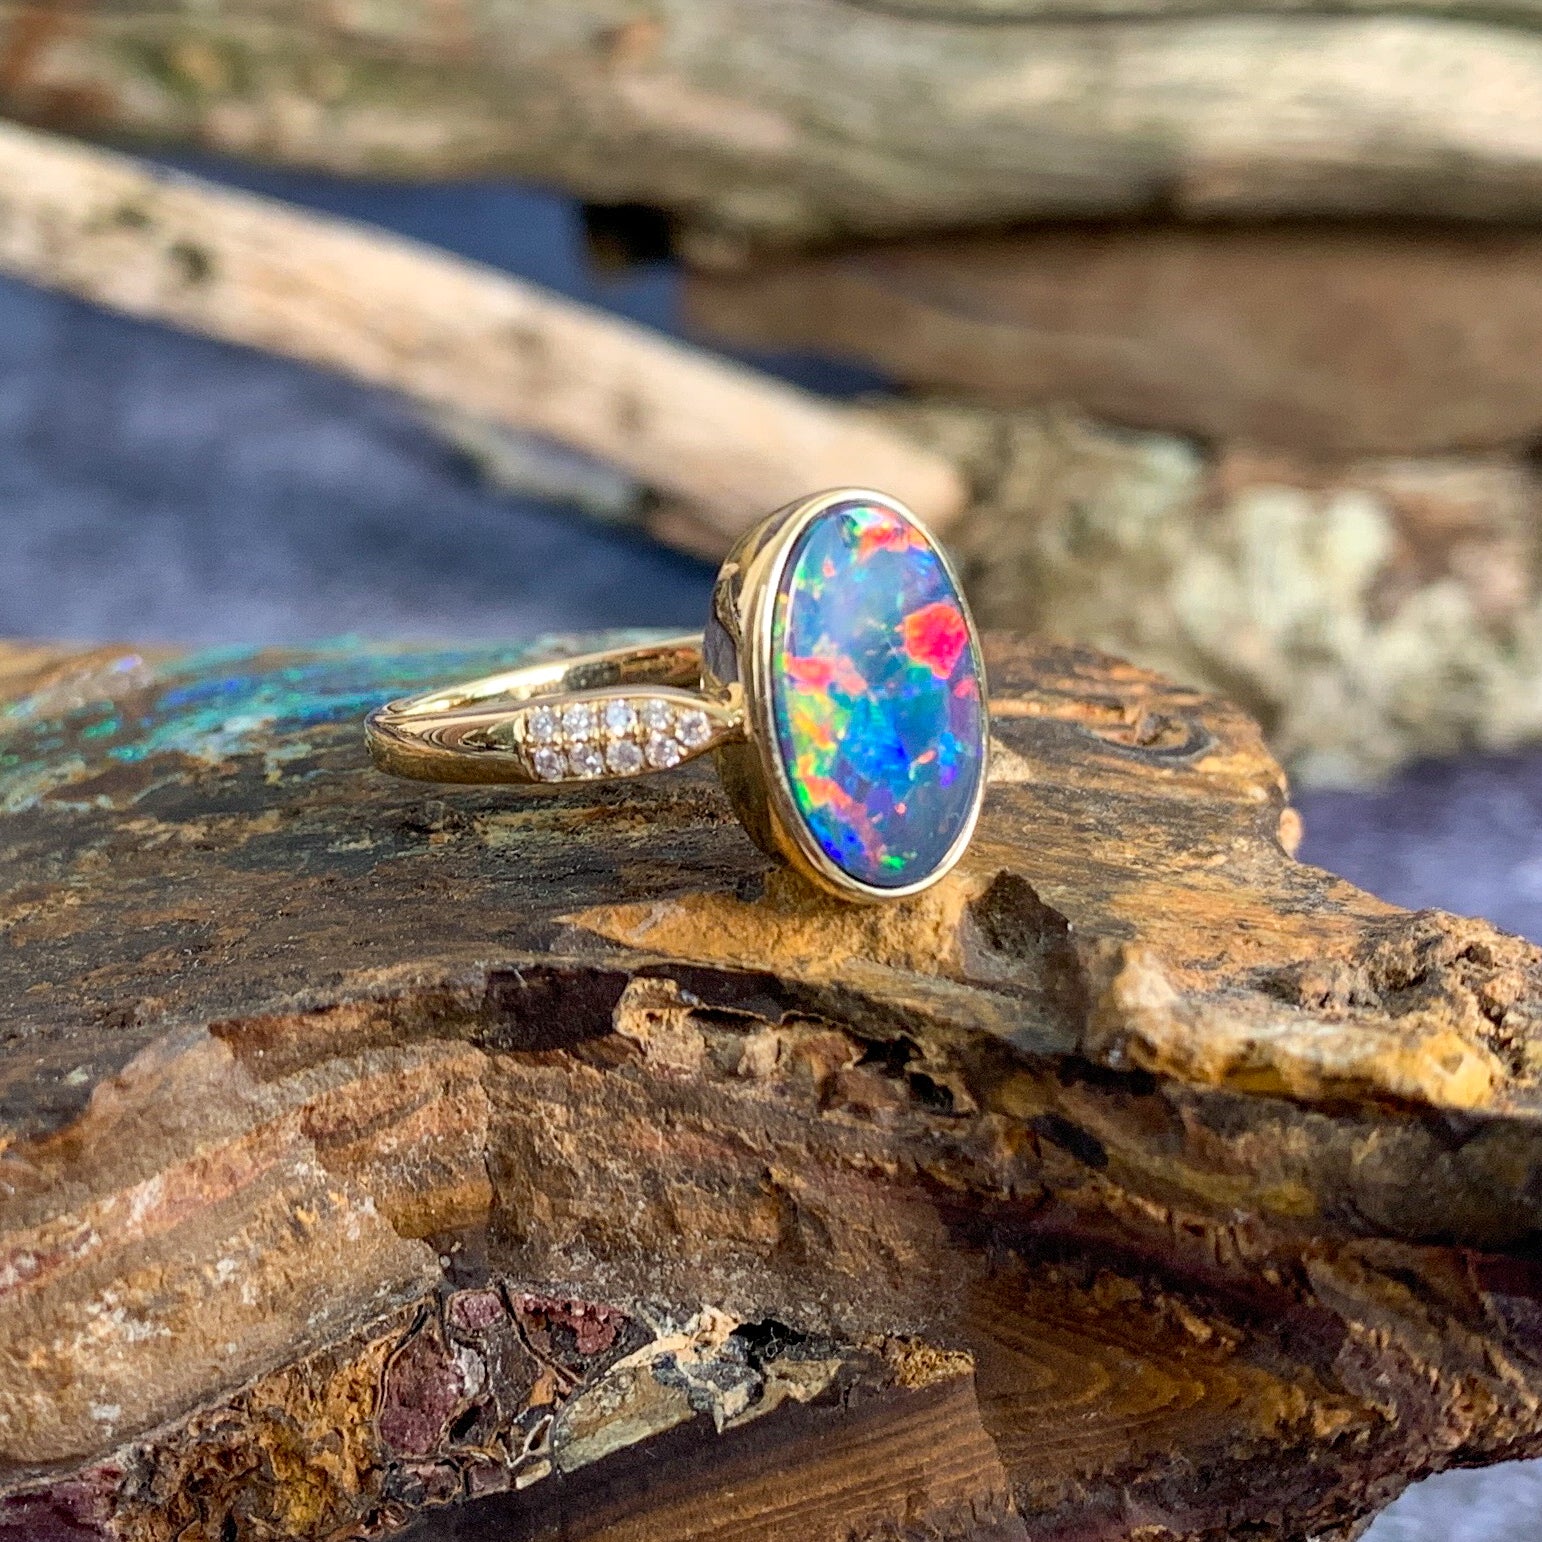 14kt Yellow Gold Oval Fire Opal doublet and diamond ring - Masterpiece Jewellery Opal & Gems Sydney Australia | Online Shop